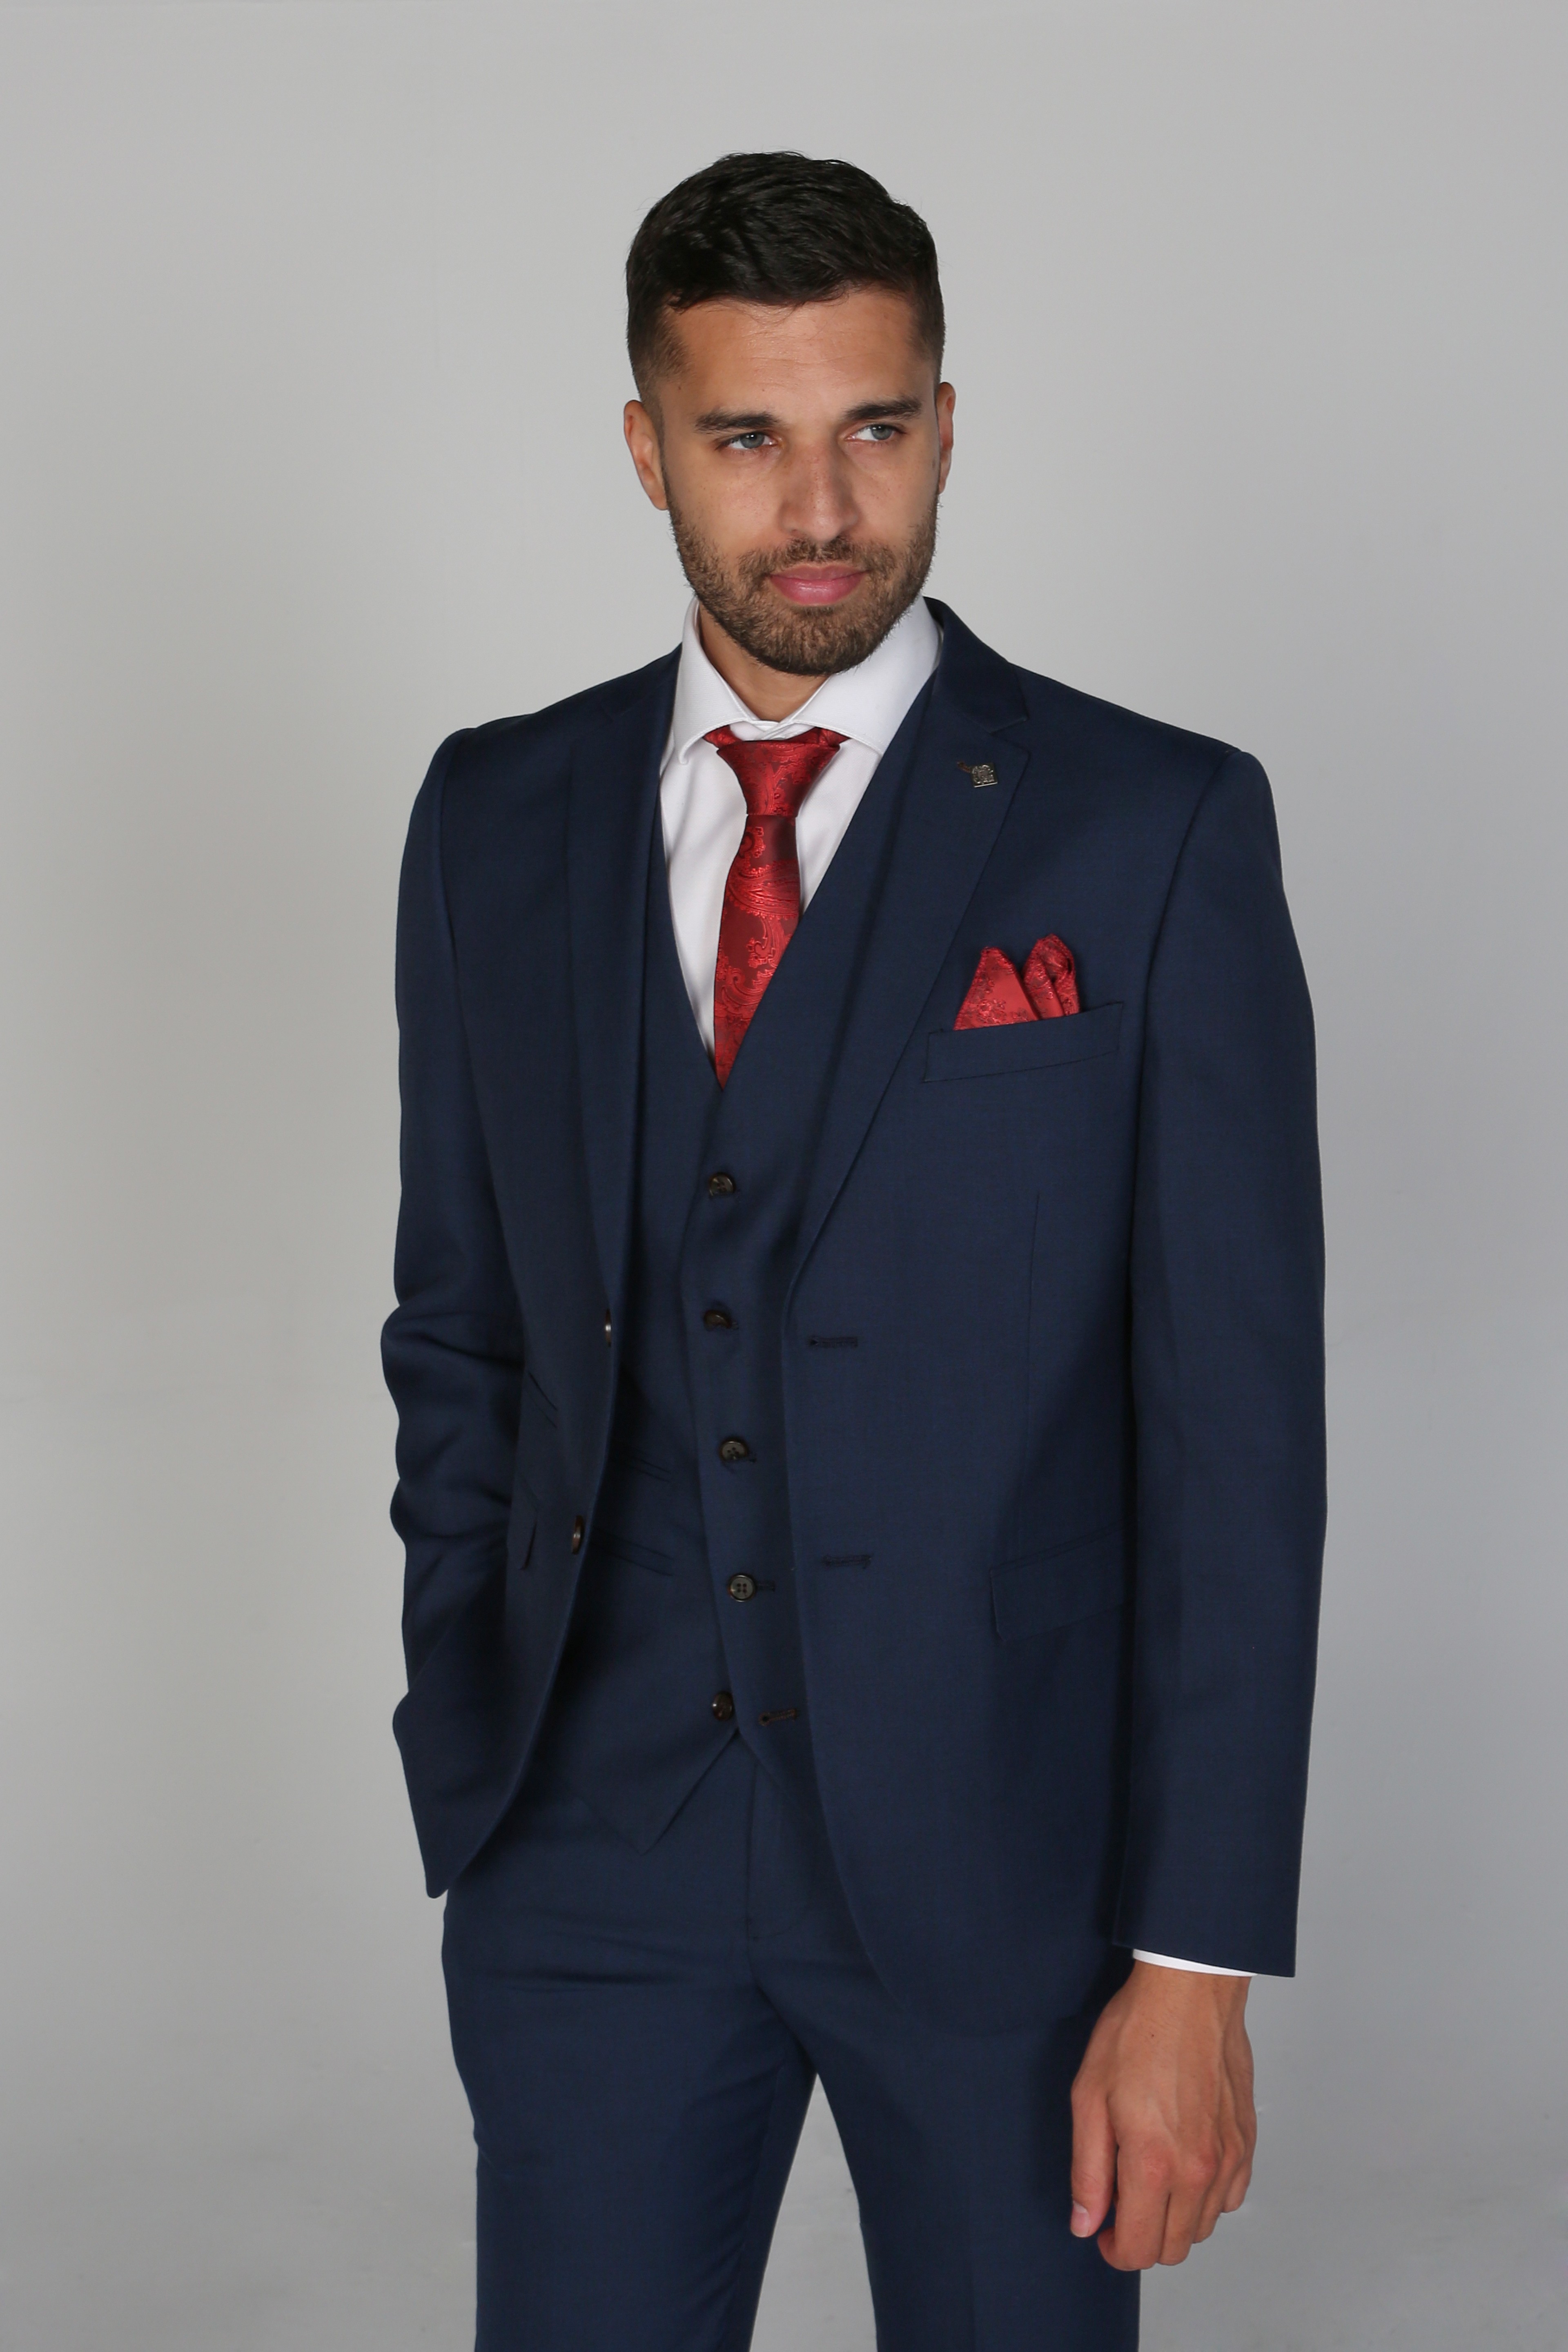 Men's Tailored Fit Formal Suit - CALVIN Navy - Navy Blue